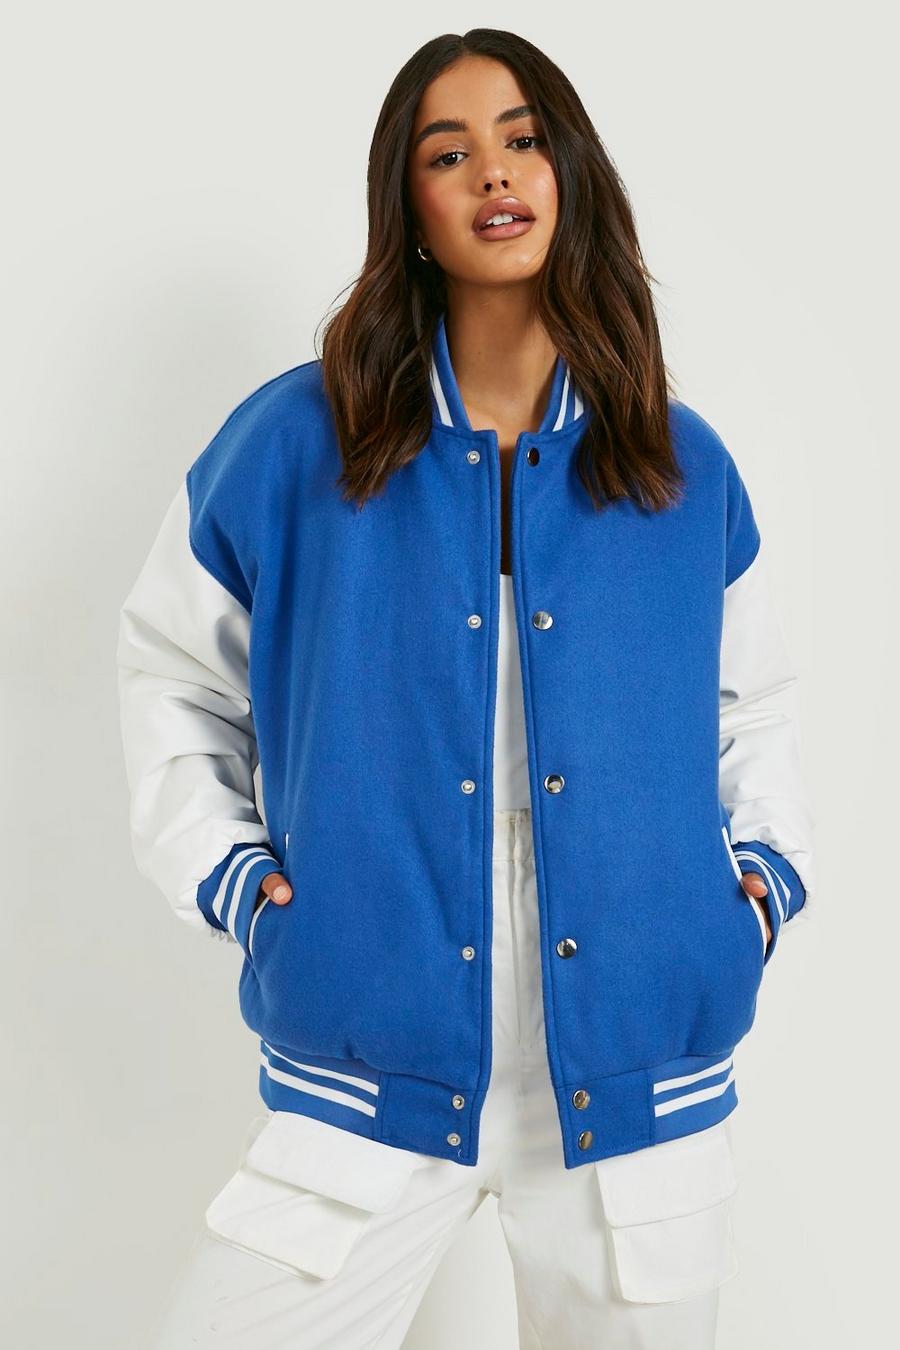 Buy Cold Fusion Women's/girls Trendy Full Sleeves Varsity Jacket